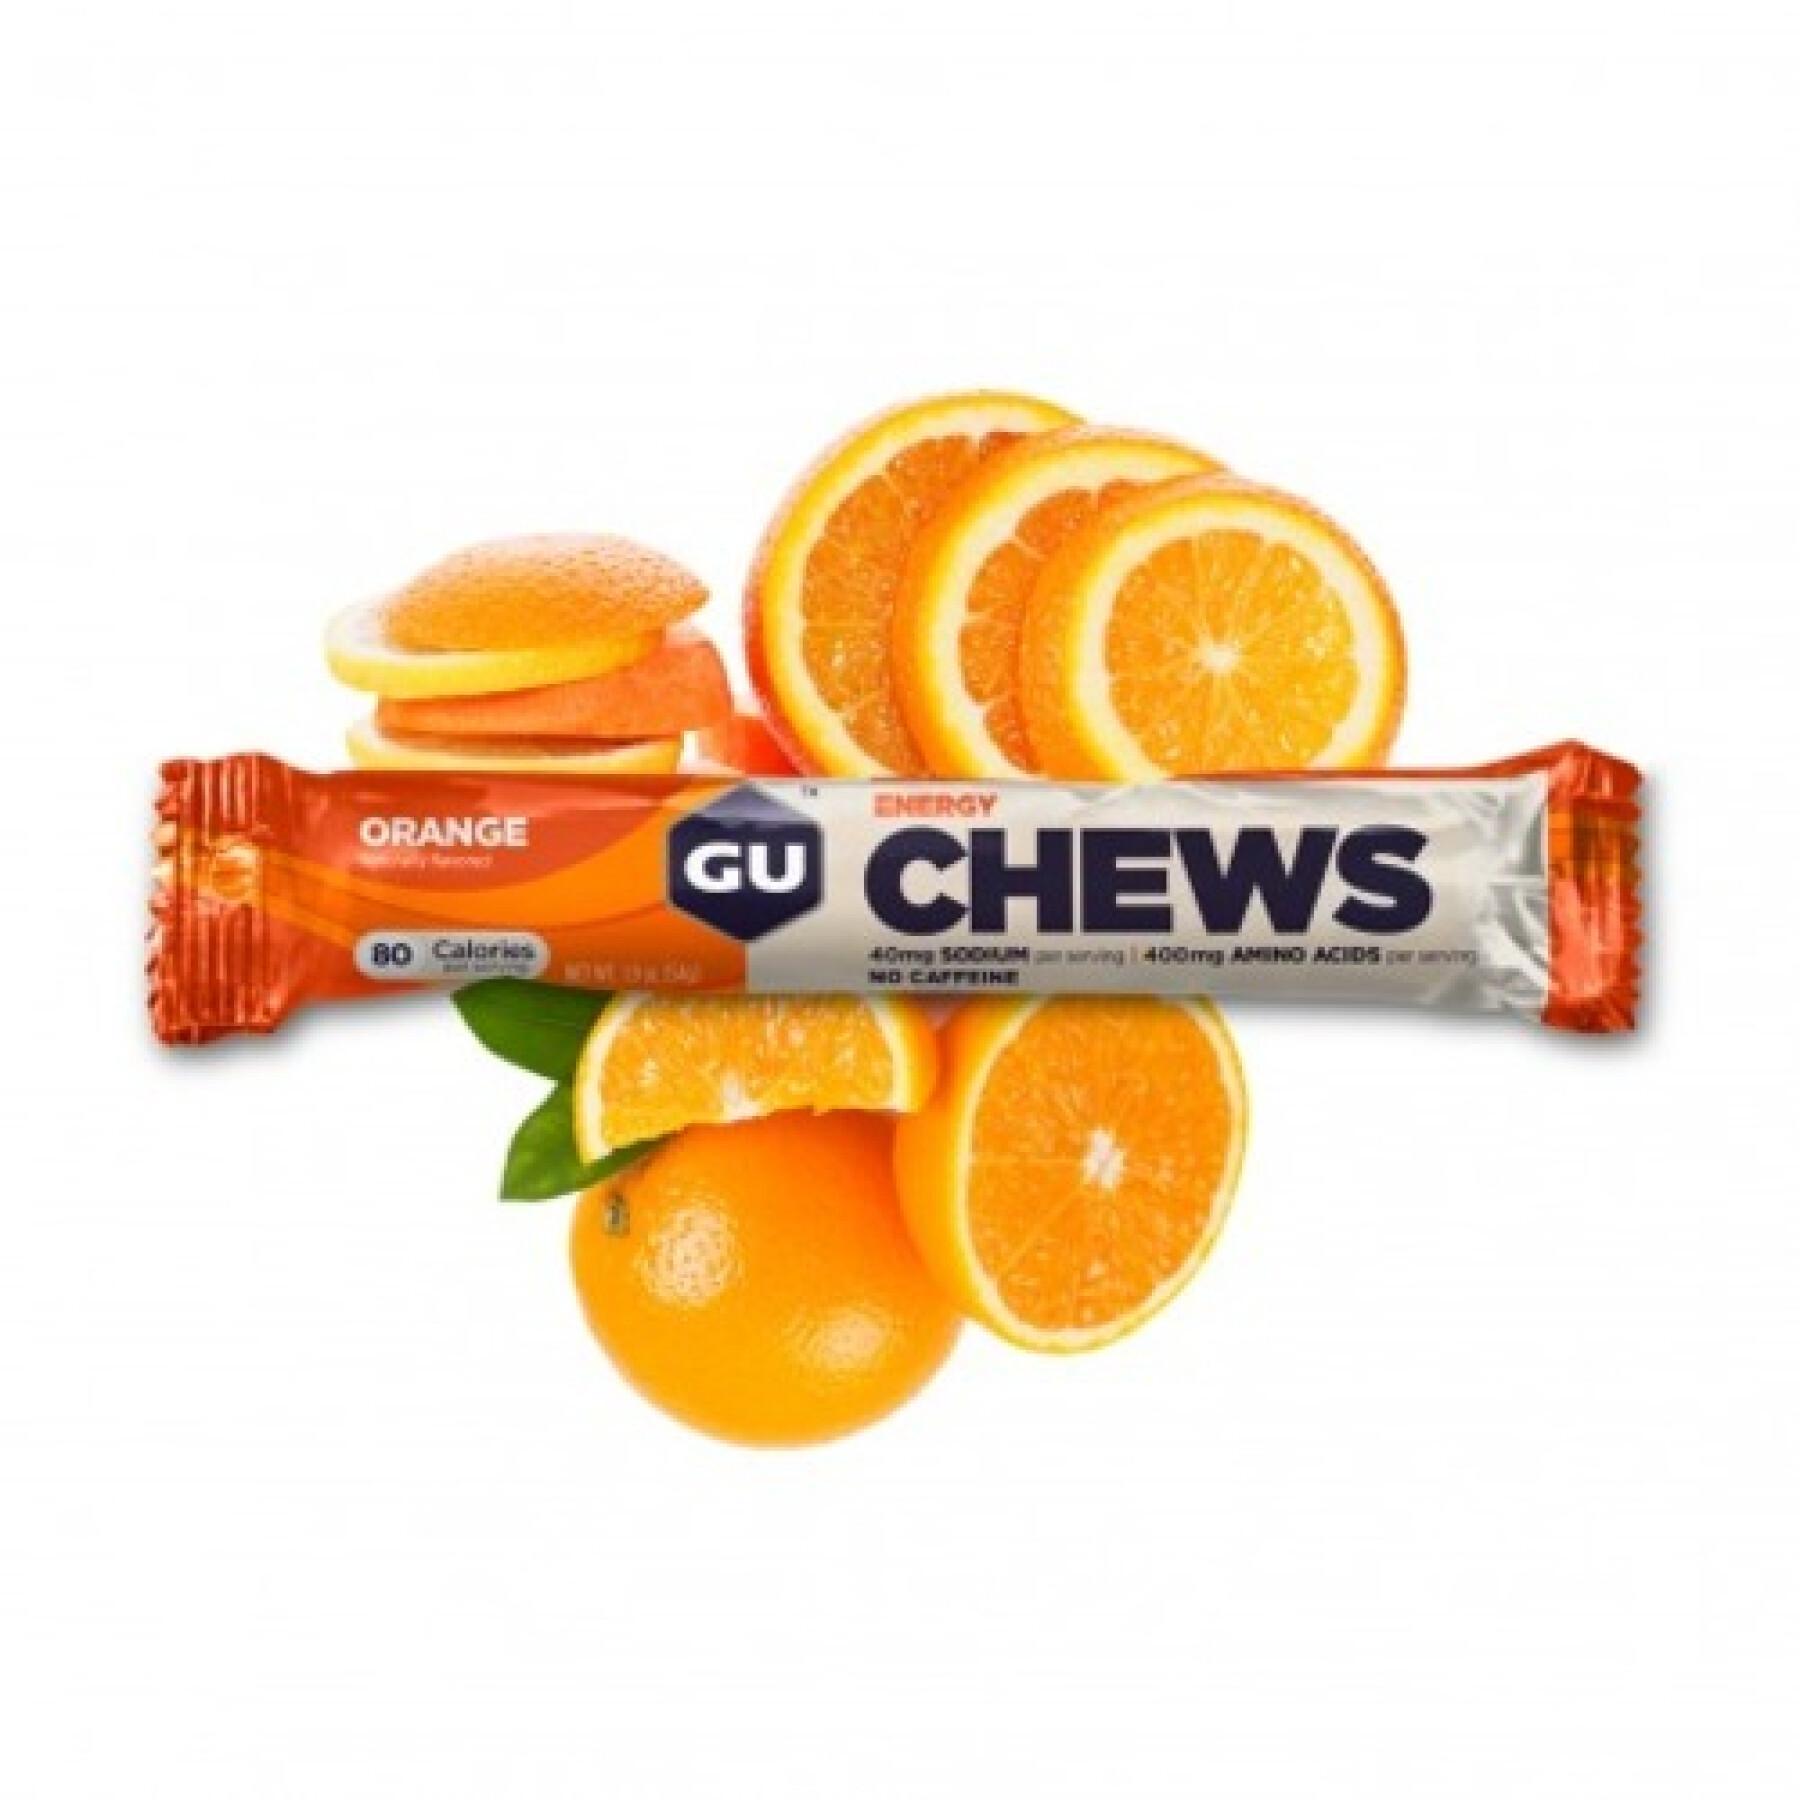 8 gomme da masticare Gu Energy orange (x18)